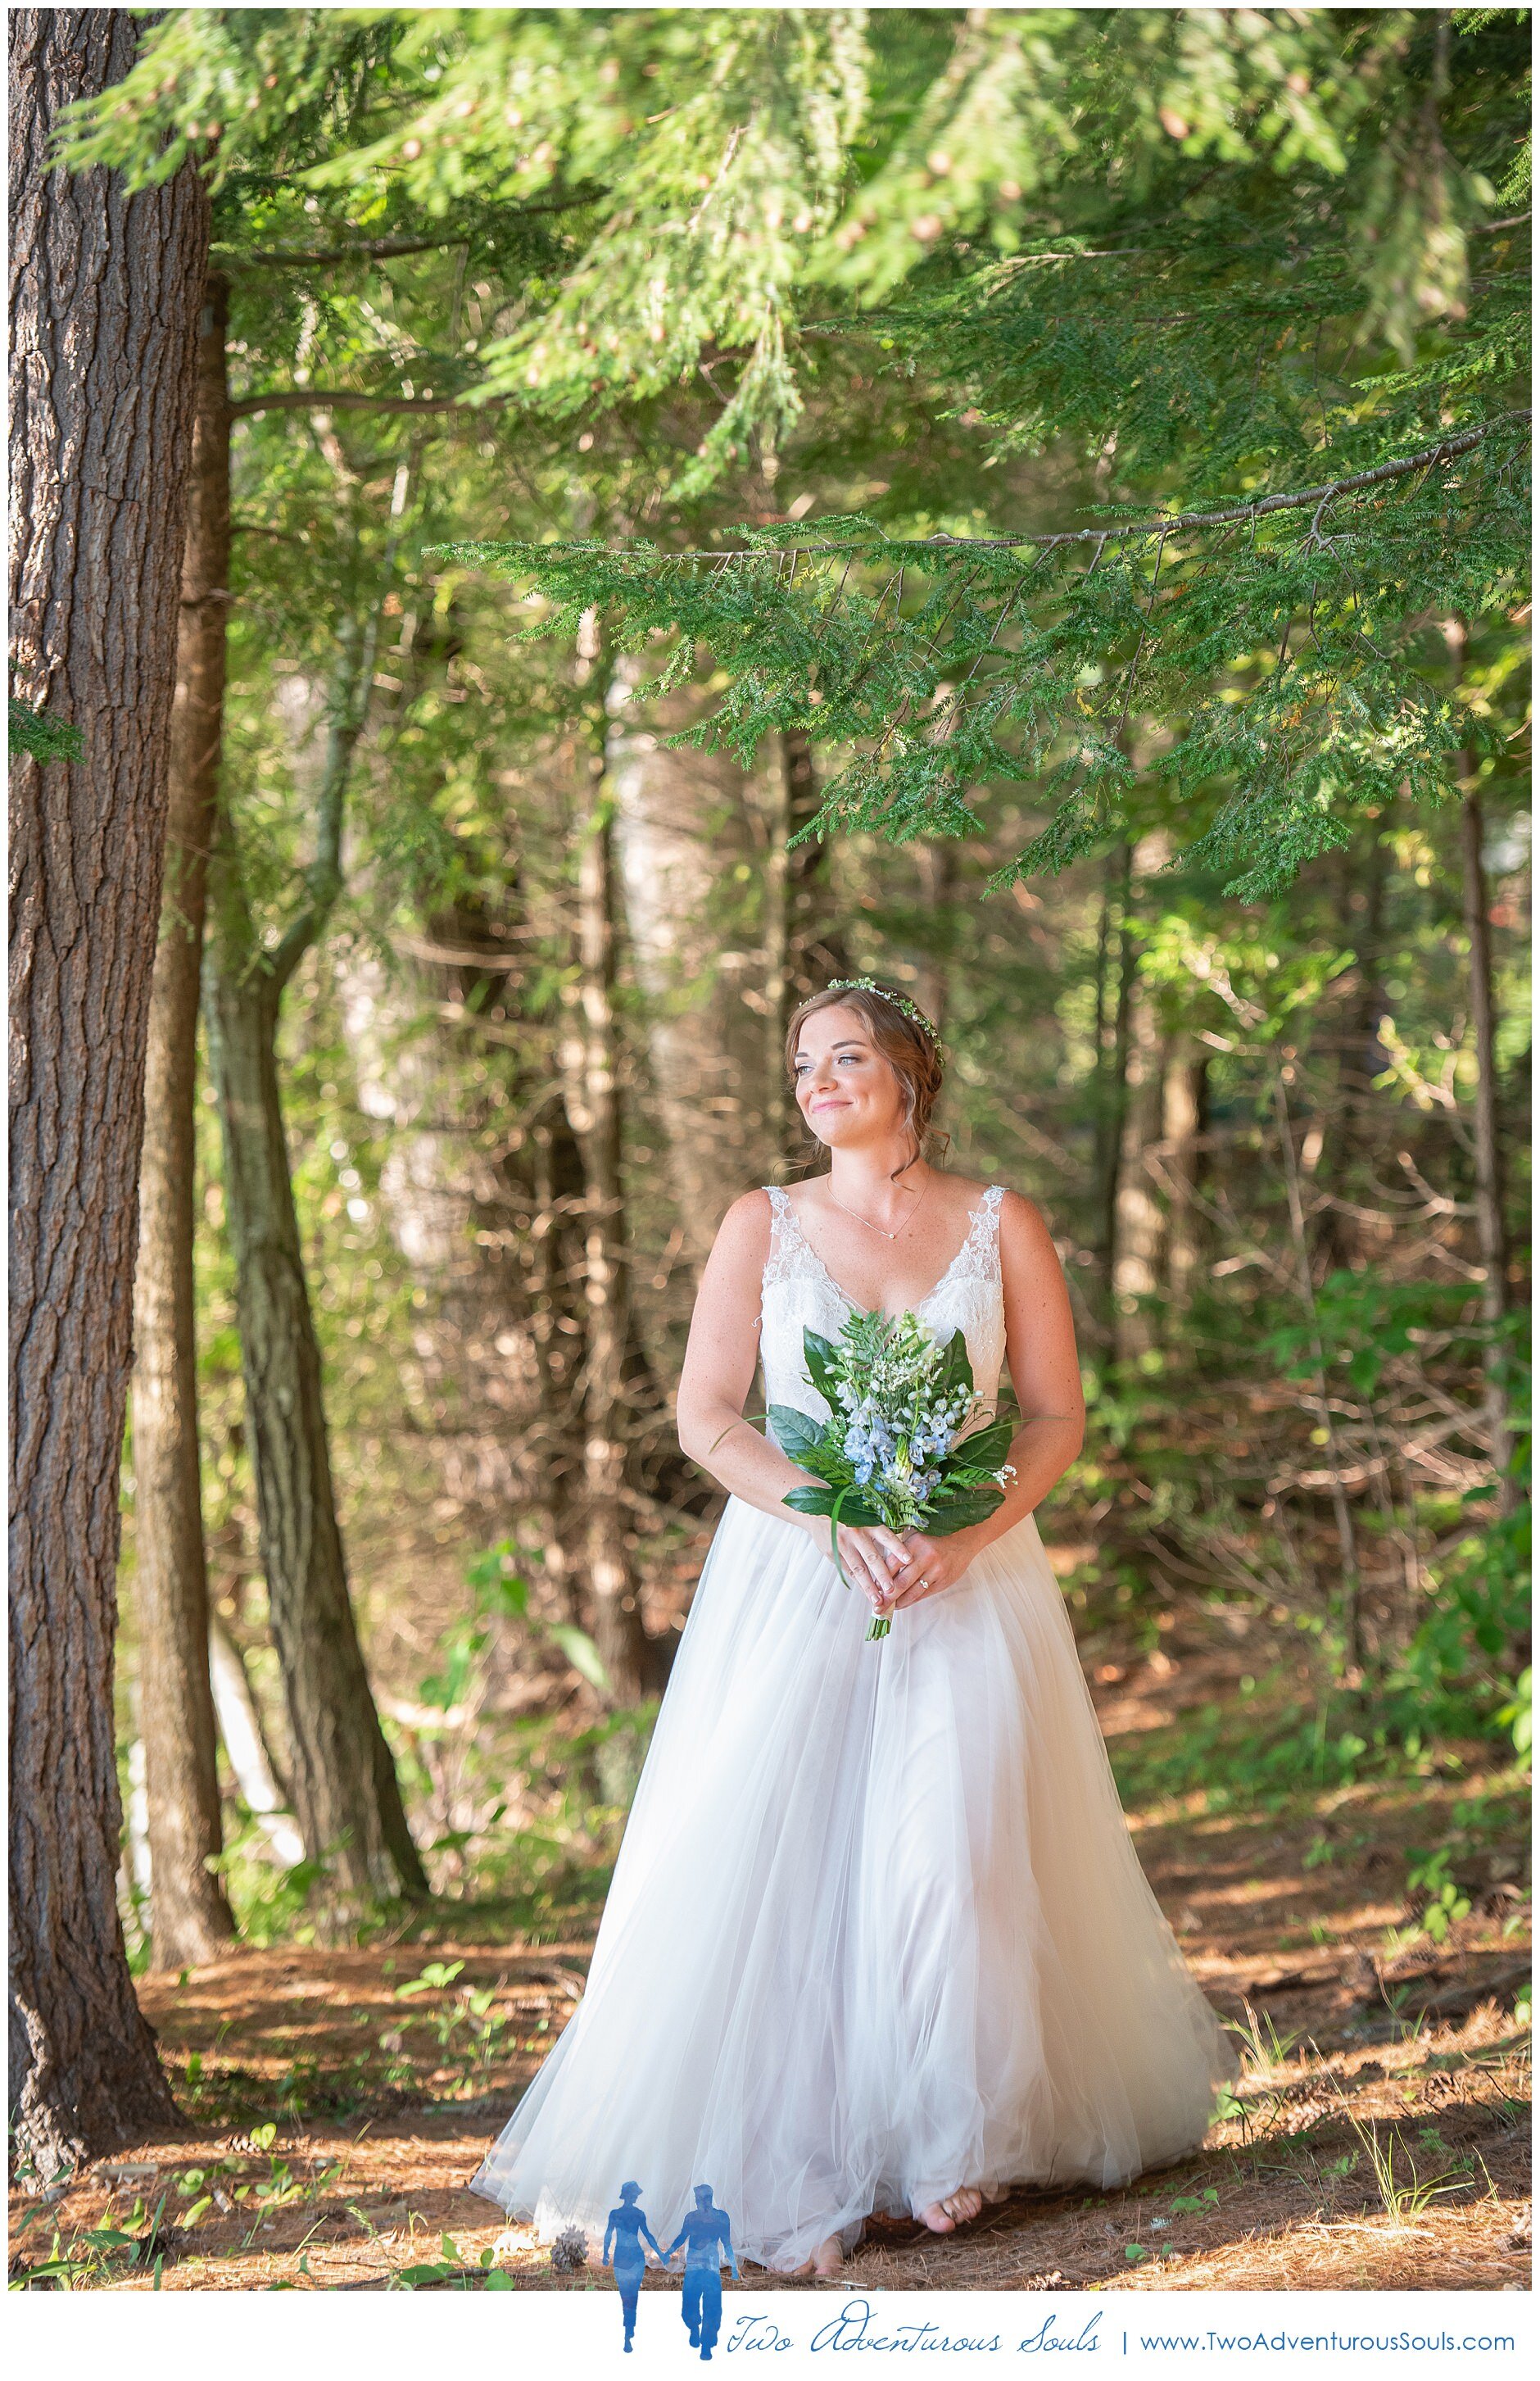 Lake Cobbosseeconte Wedding, Manchester Maine, Maine Lake Wedding Photographer, Two Adventurous Souls - 080820_0014.jpg